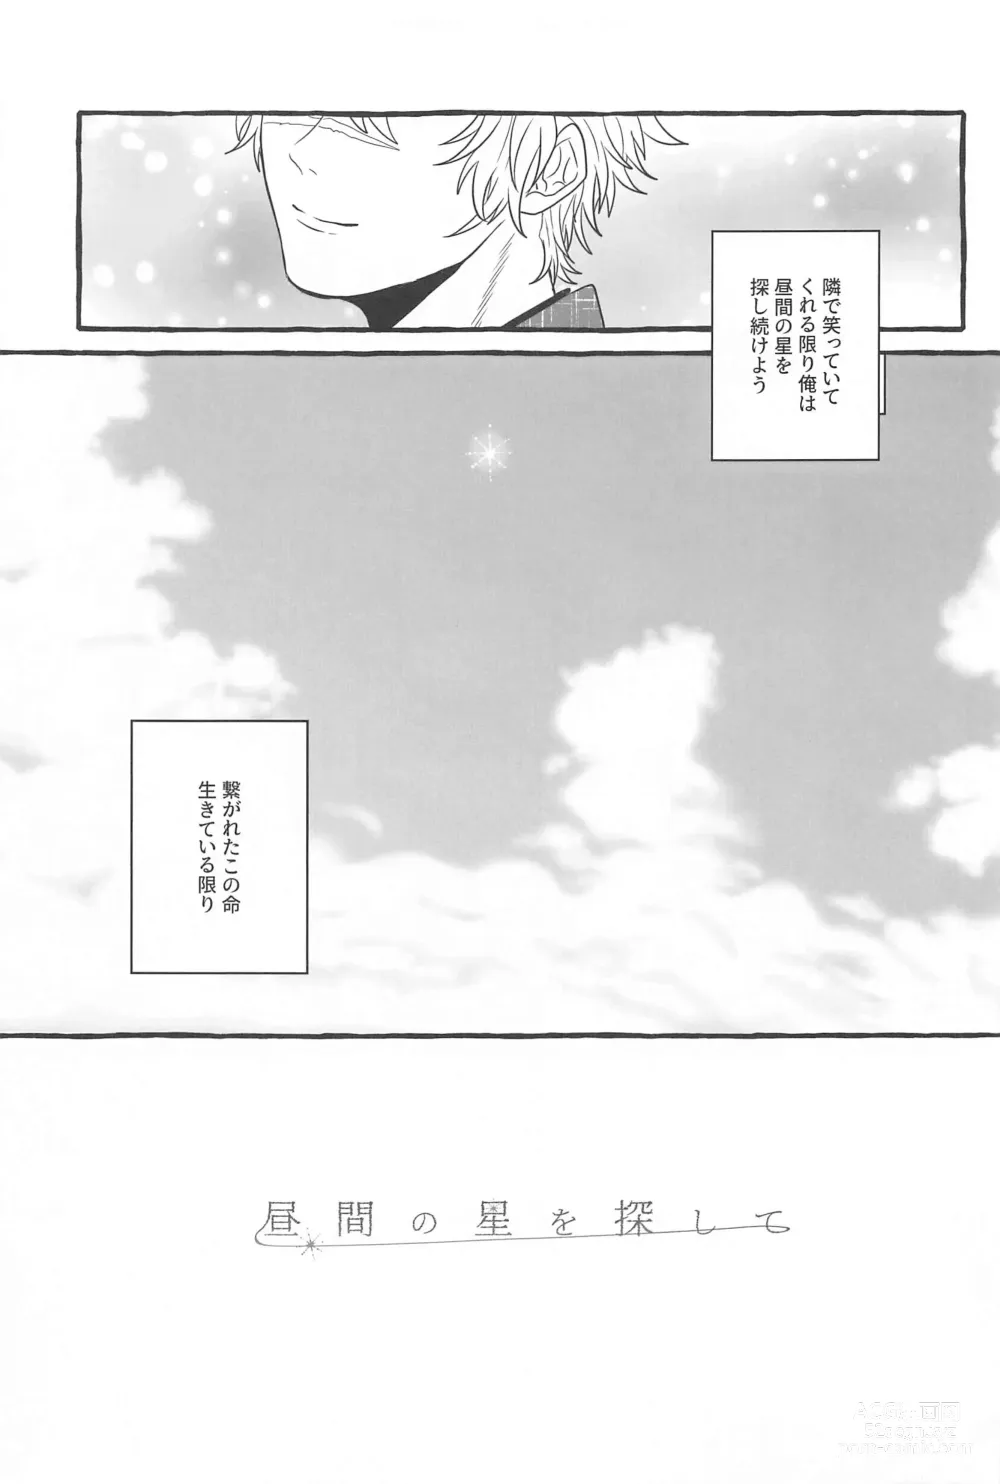 Page 32 of doujinshi Hiruma no Hoshi o Sagashite - Looking for stars in the daytime